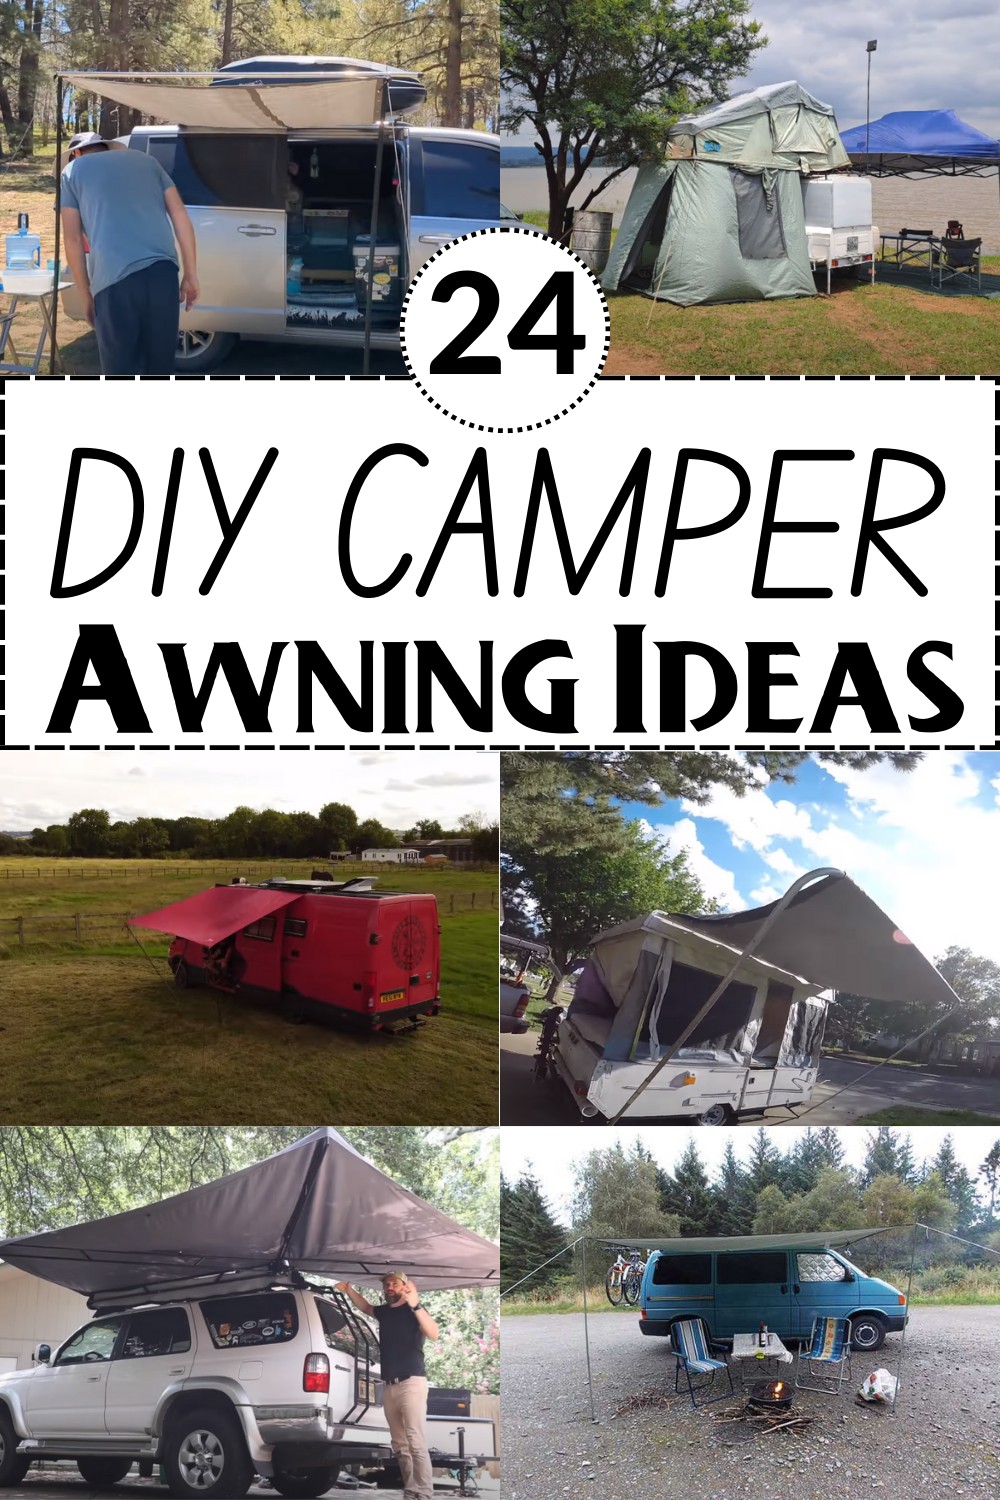 DIY Camper Awning Ideas